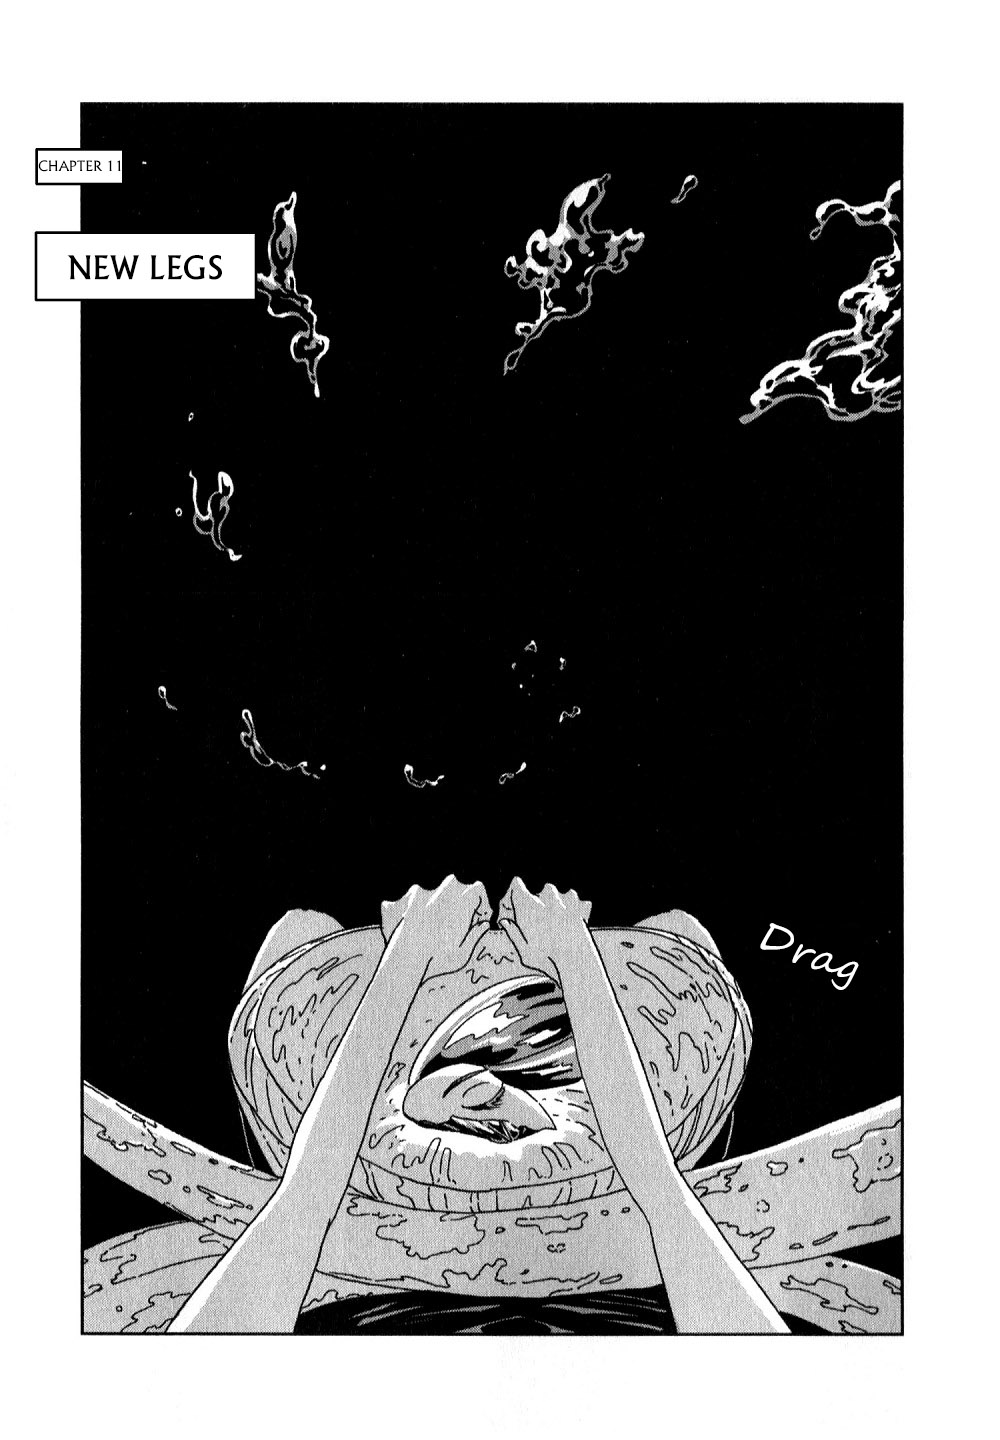 Houseki No Kuni Vol.2 Chapter 11: New Legs - Picture 1